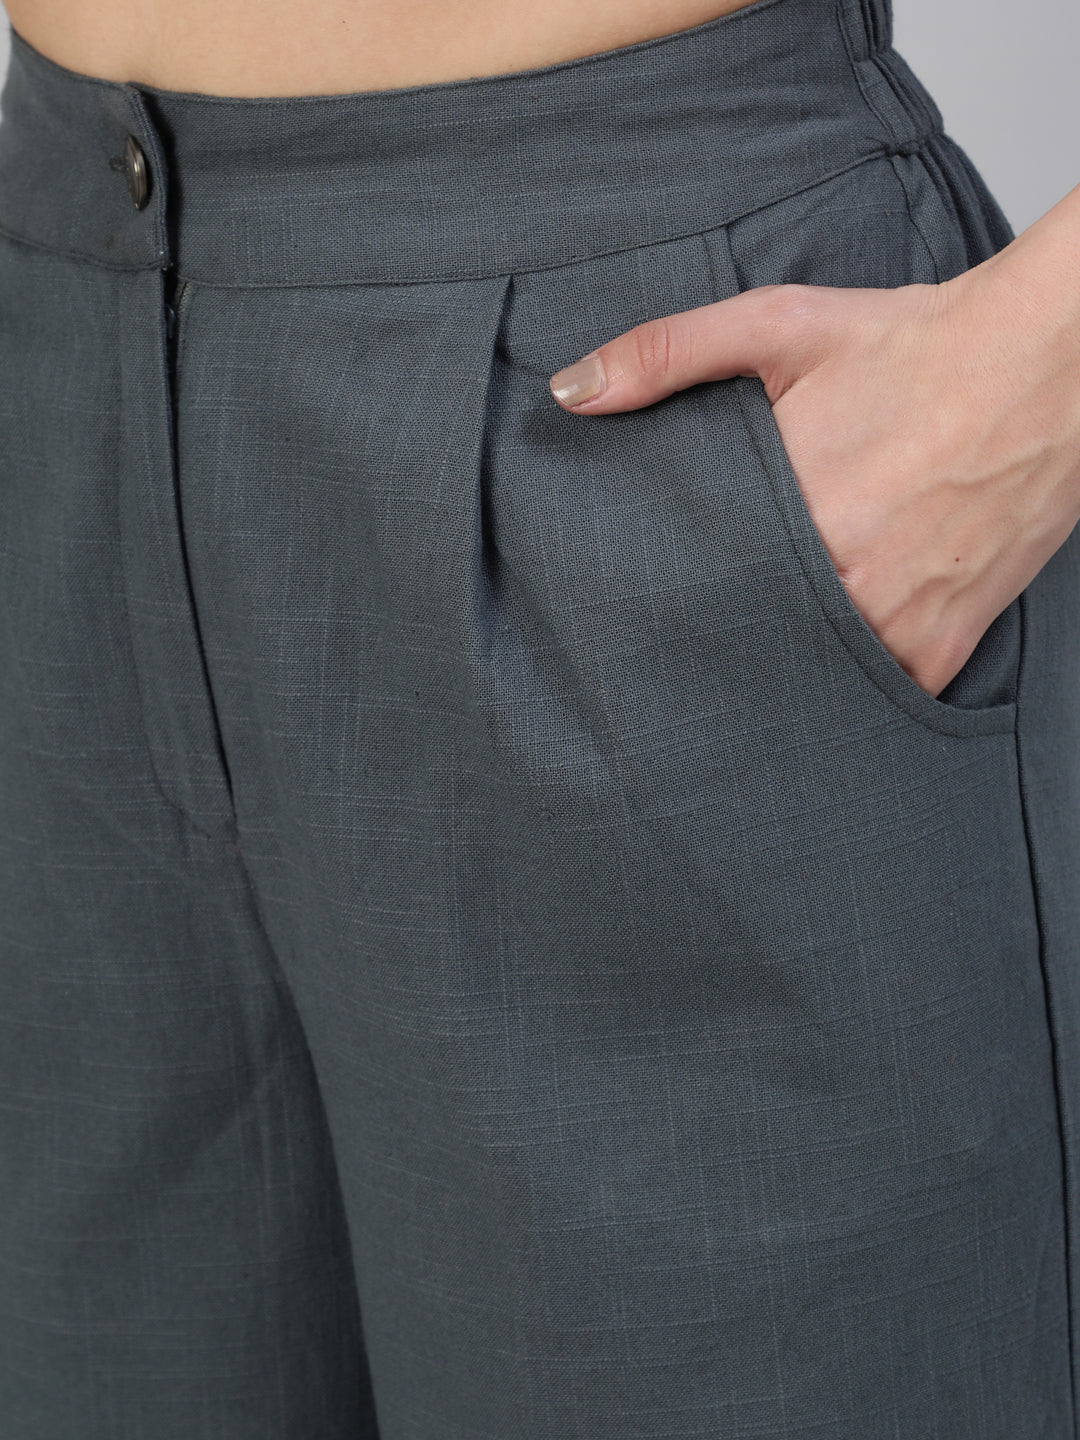 Charcoal Grey Cotton Slub Straight High Rise Bottom Fold Pants